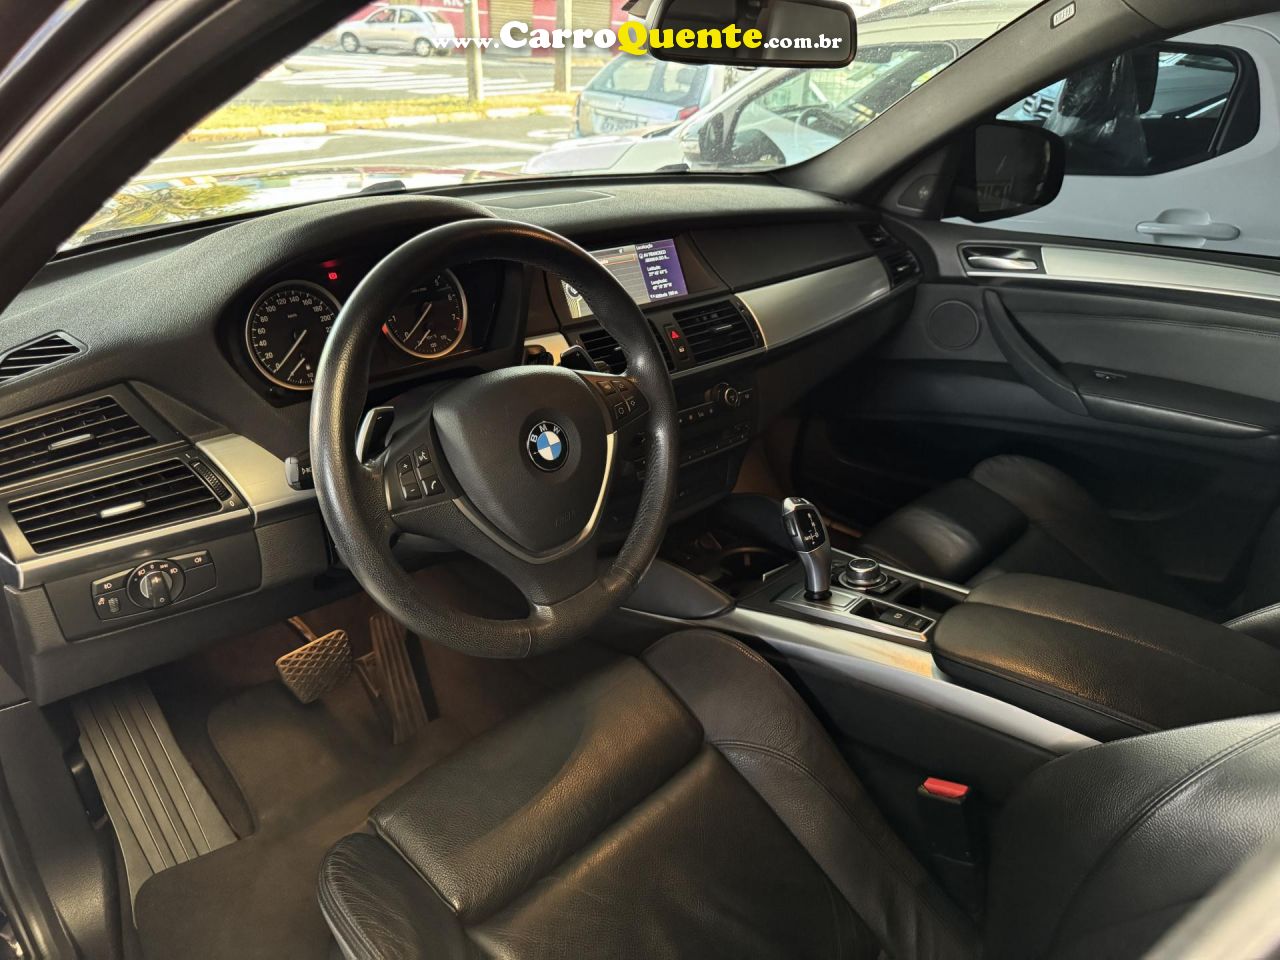 BMW   X6 XDRIVE 35I 3.0 306CV BI-TURBO   PRETO 2014 3.0 GASOLINA - Loja